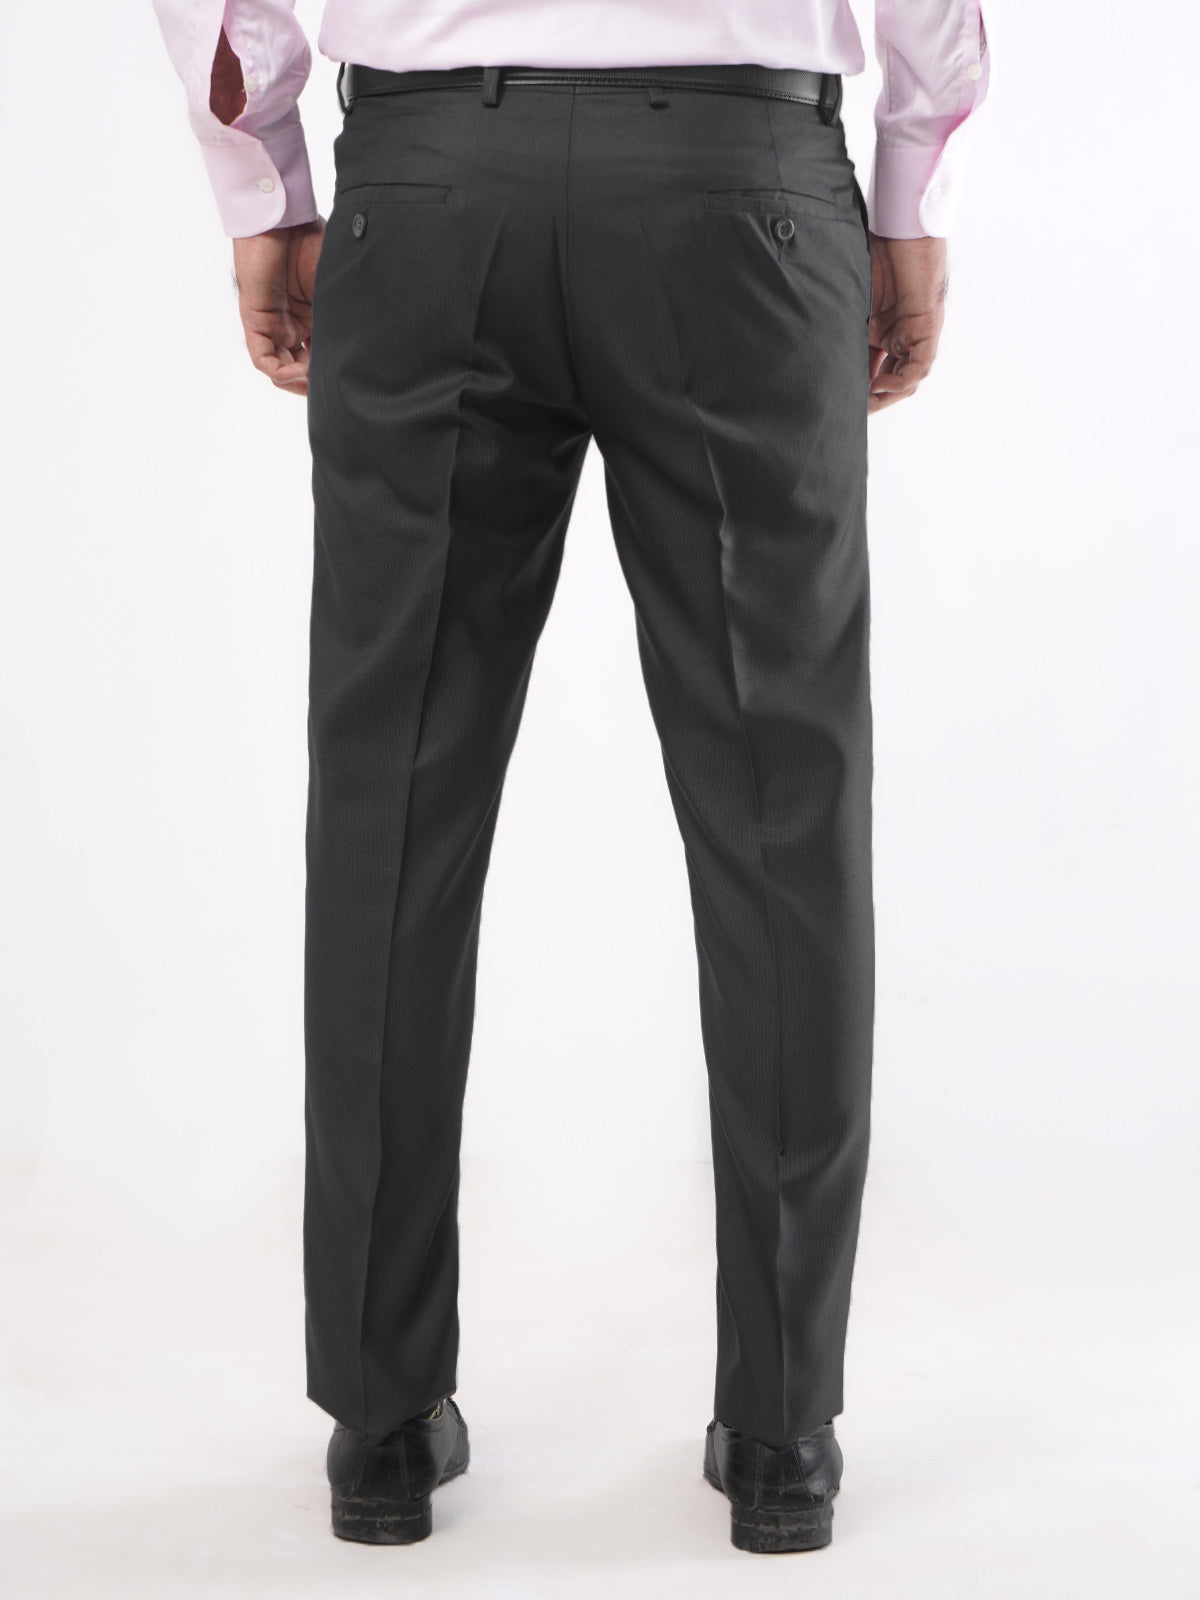 Black Plain Executive Formal Dress Trouser (FDT-135)